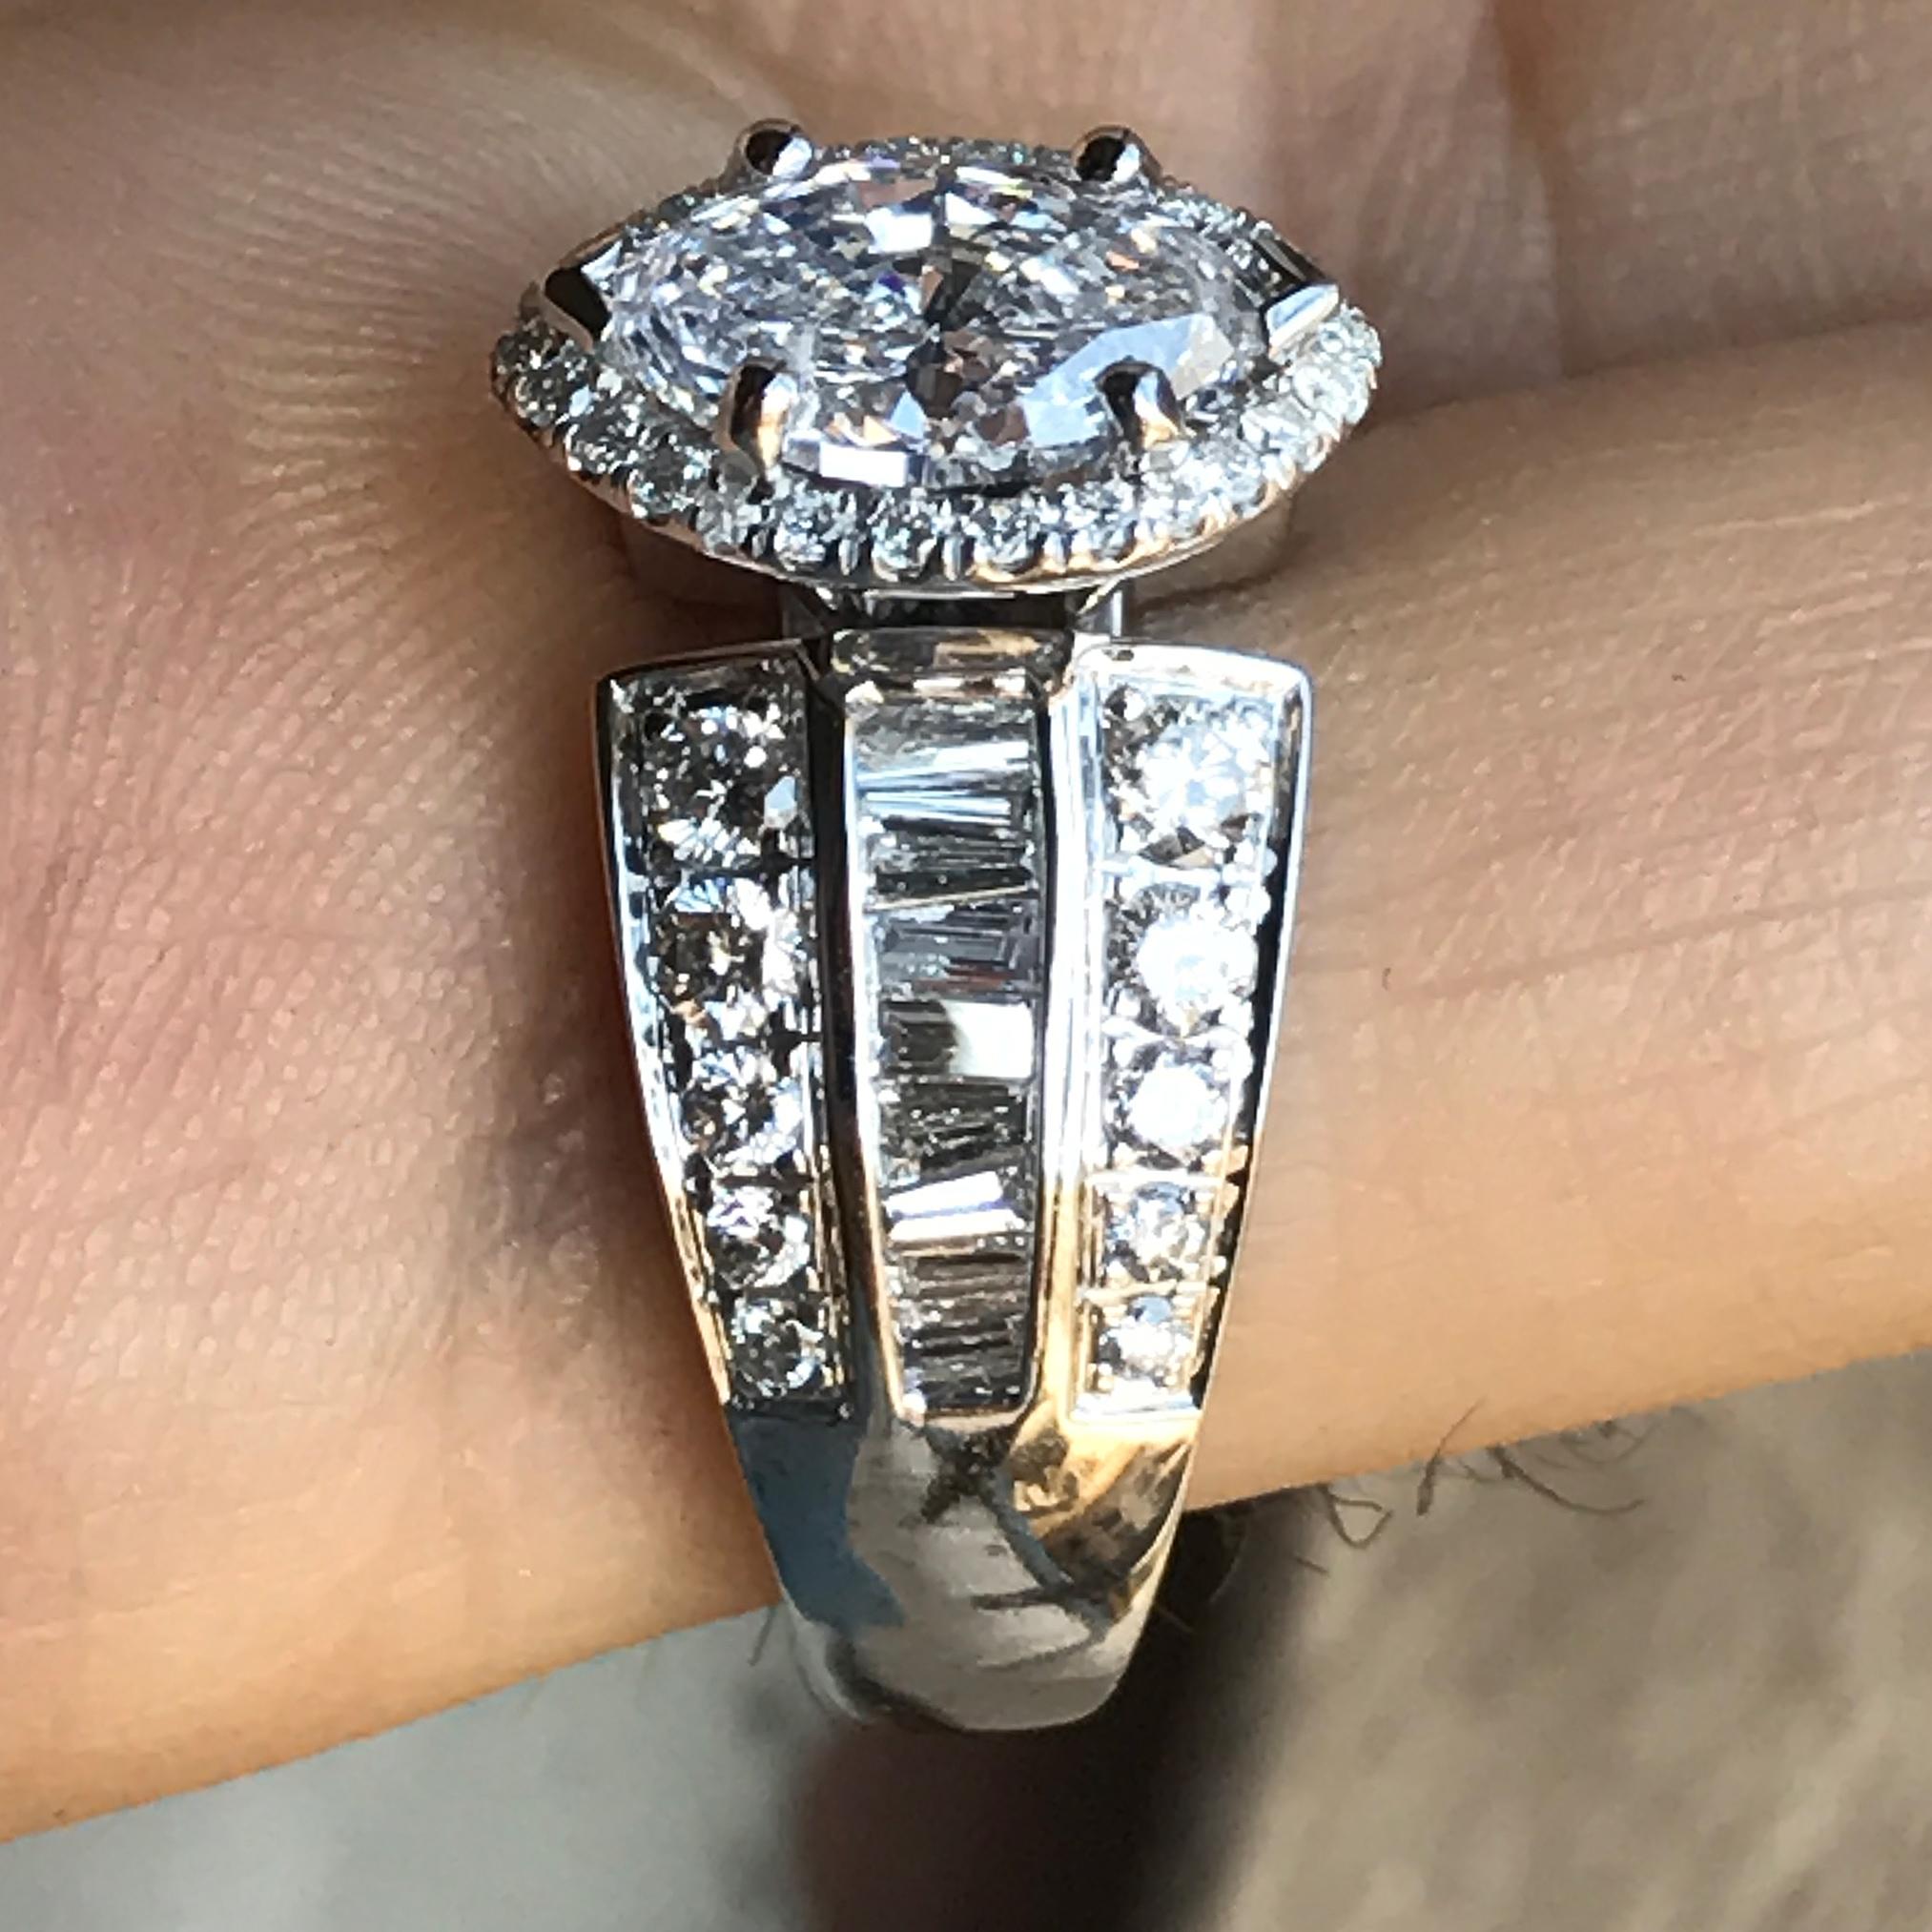 1.25 carat marquise diamond ring